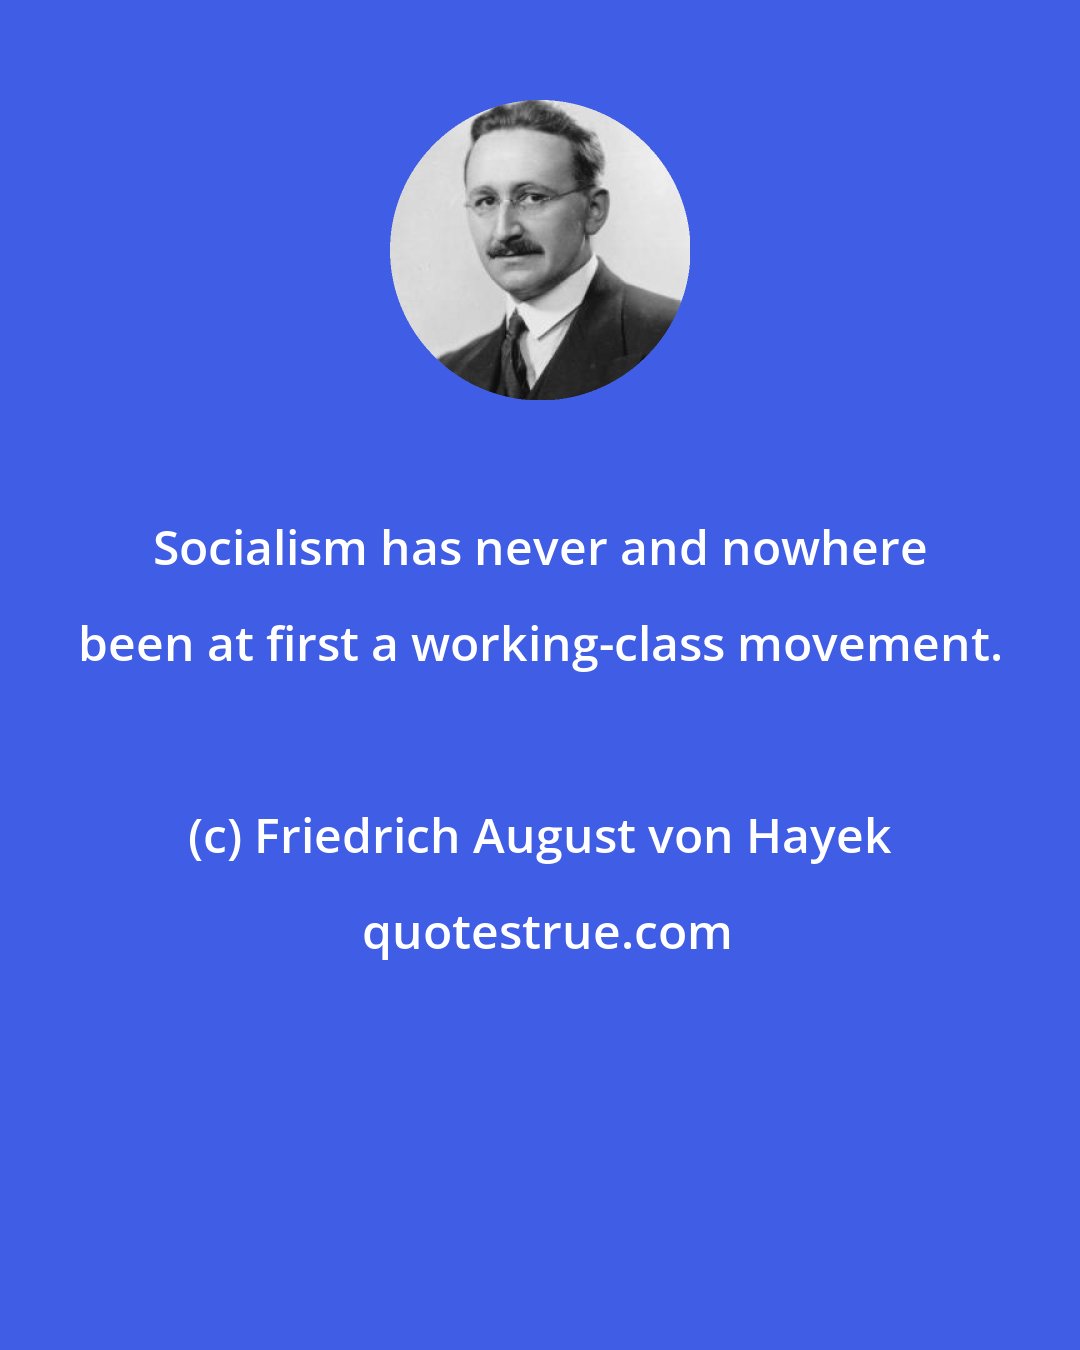 Friedrich August von Hayek: Socialism has never and nowhere been at first a working-class movement.